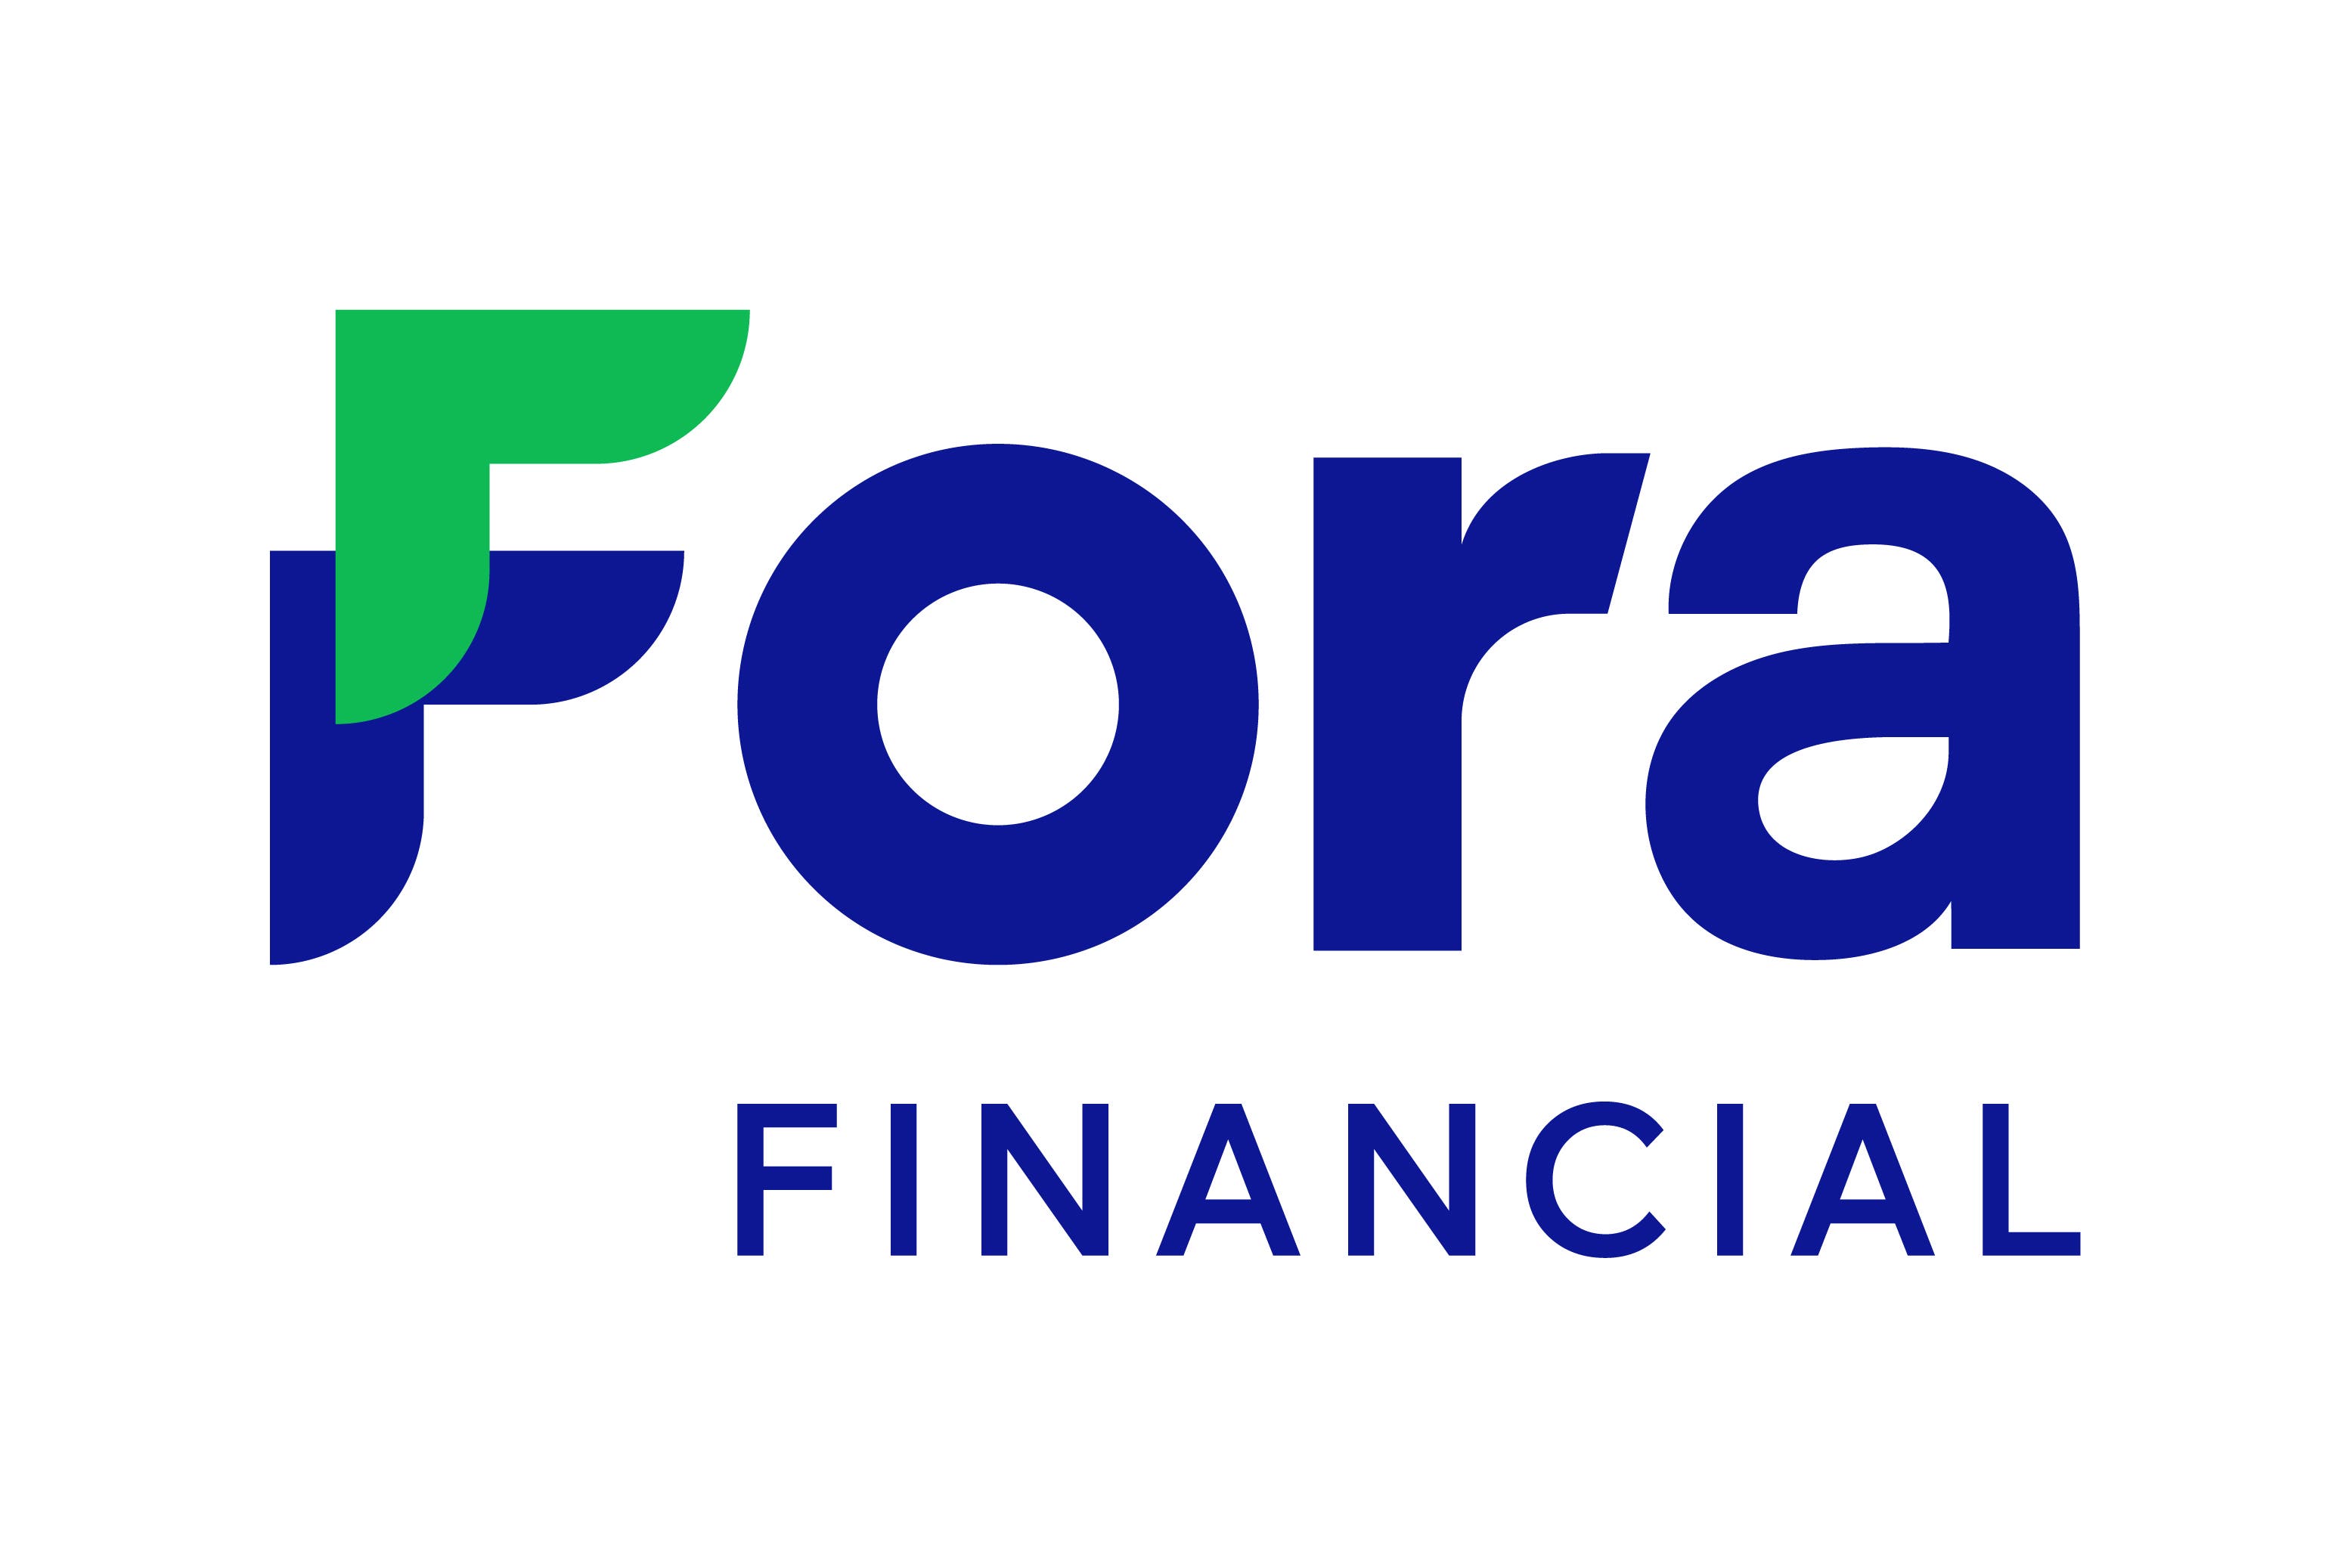 Fora Financial